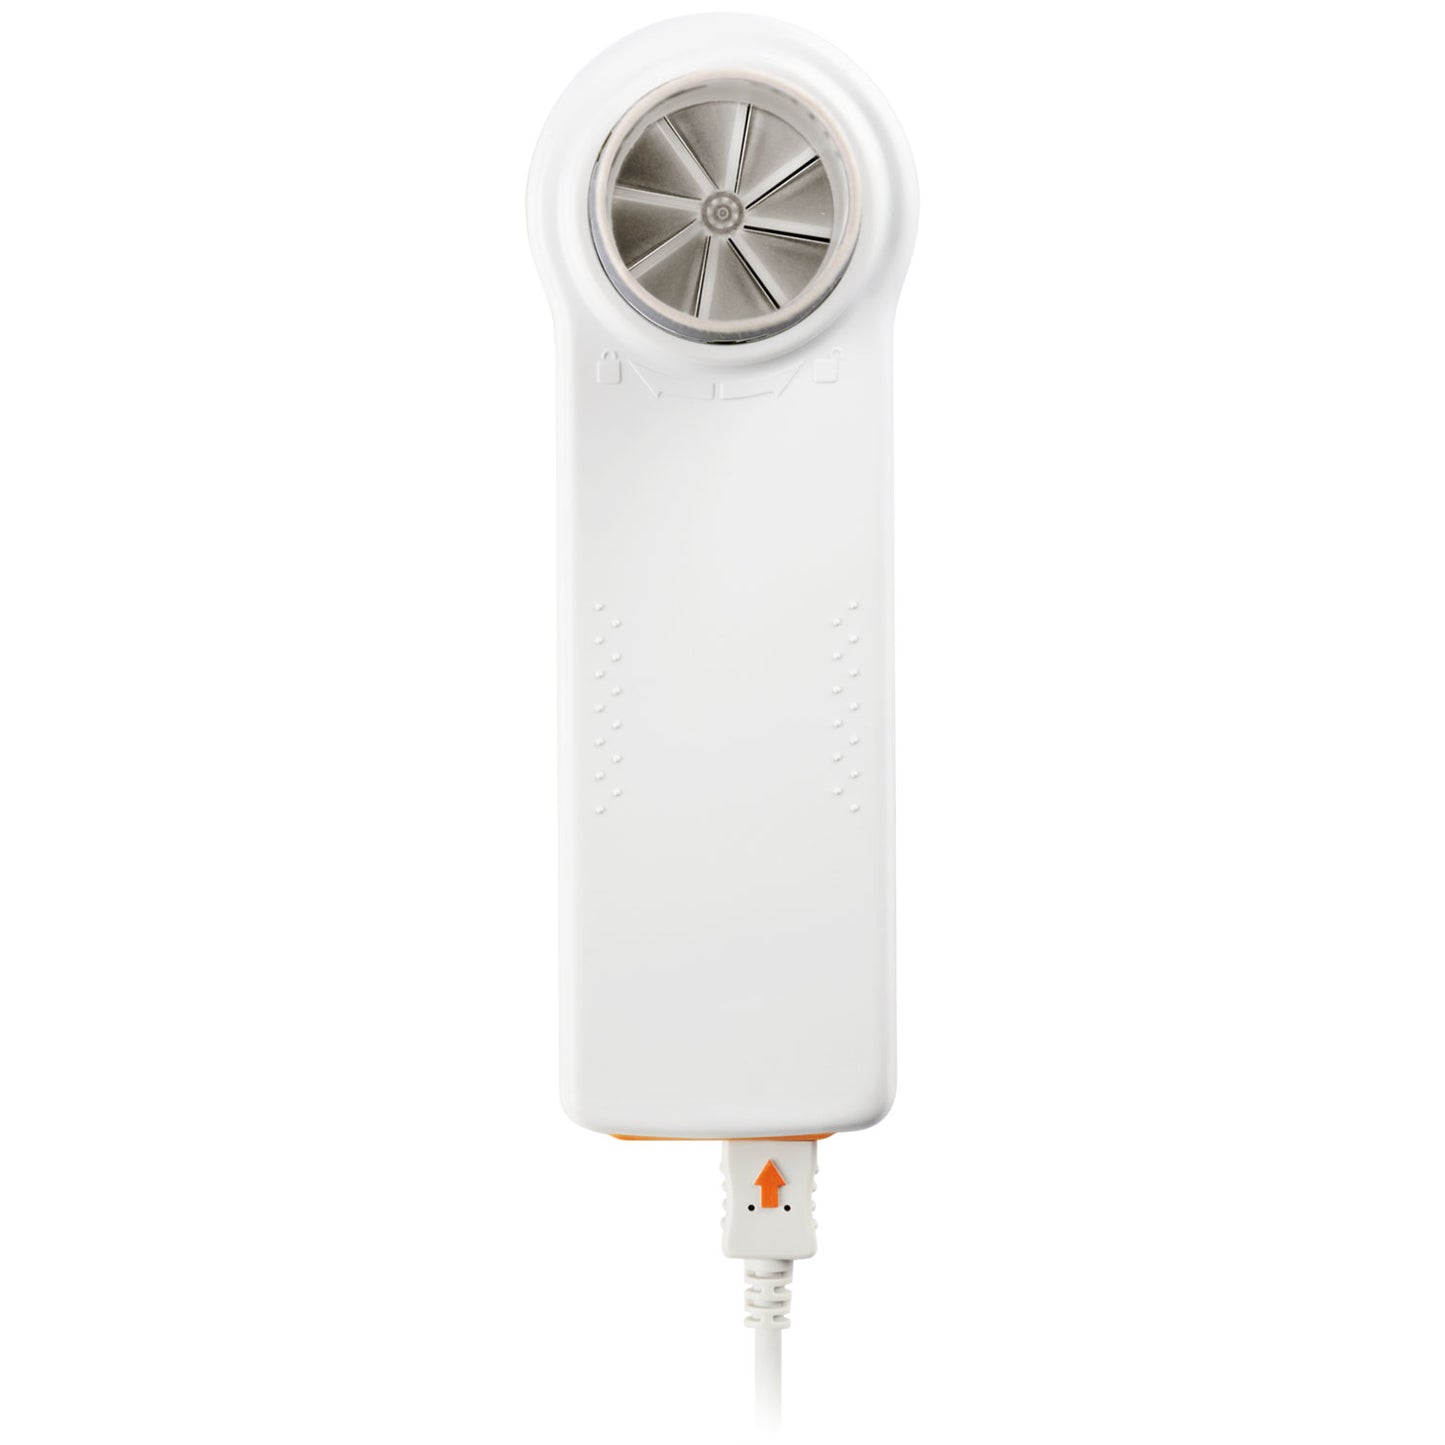 MIR Minispir Spirometer/Oximeter & 100 Disposable Turbines